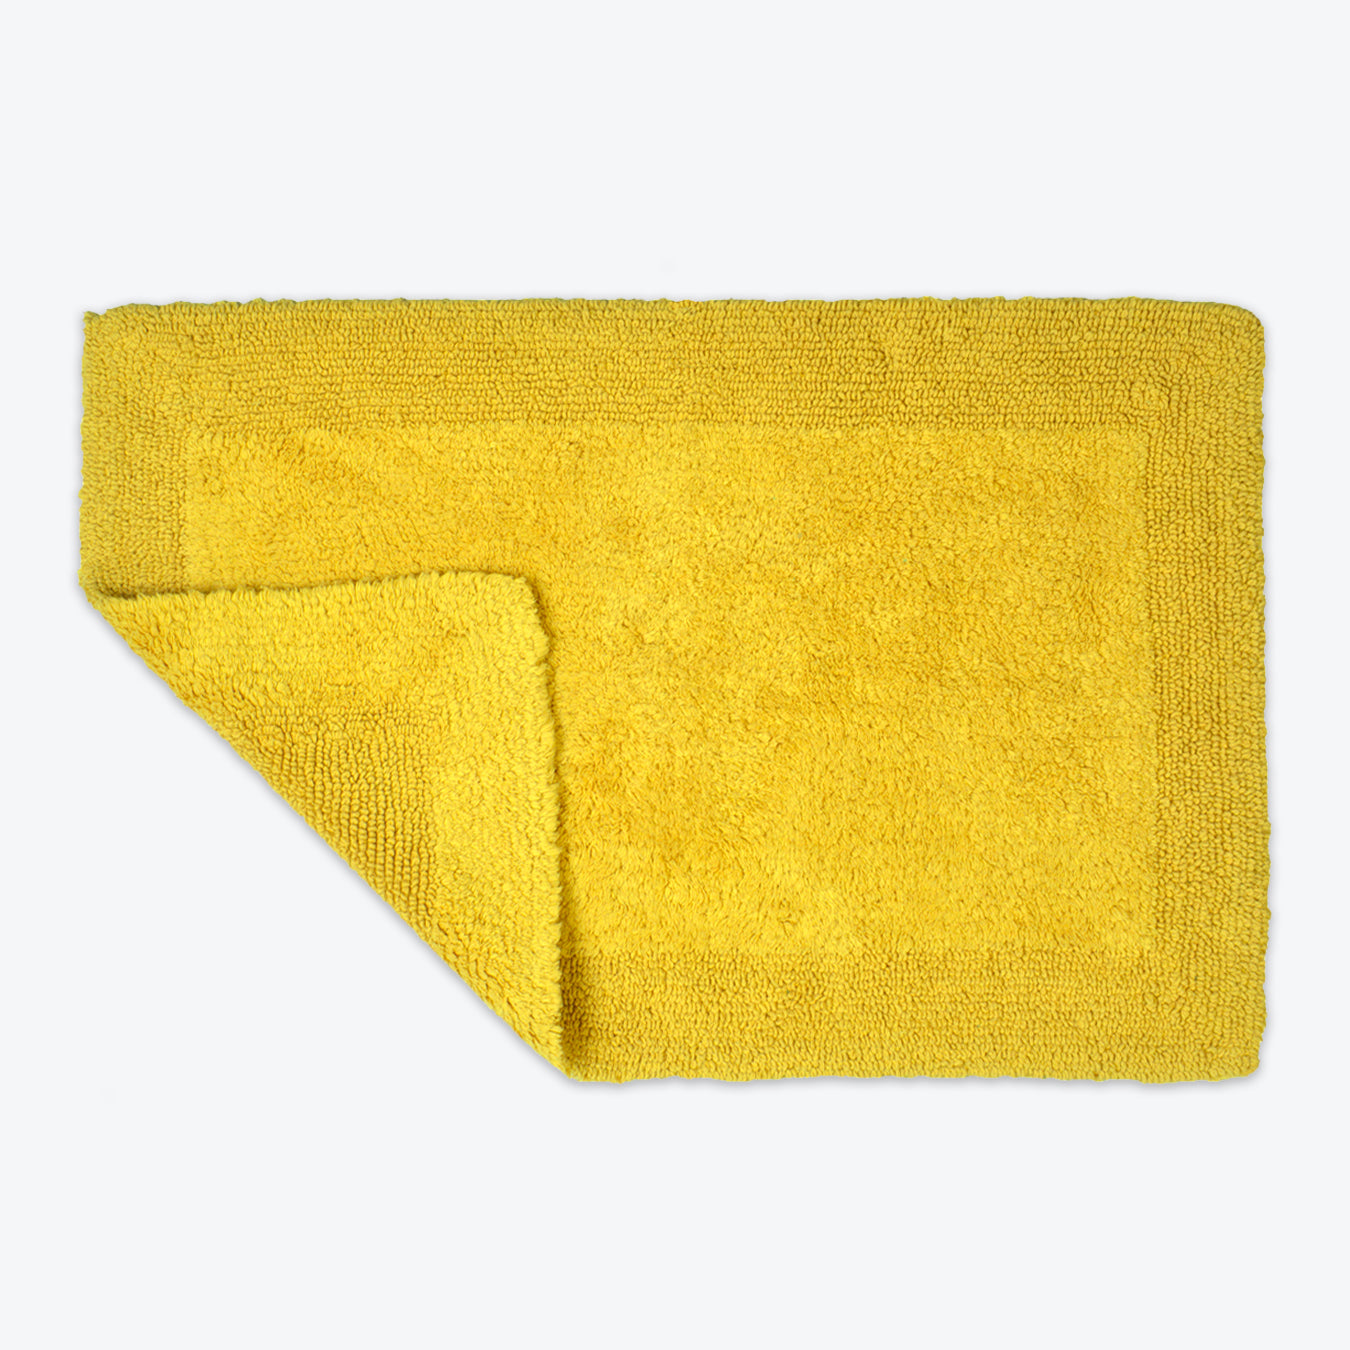 Mustard Yellow Reversible Cotton Large Bath Mat - Luxury Thick Bathmat